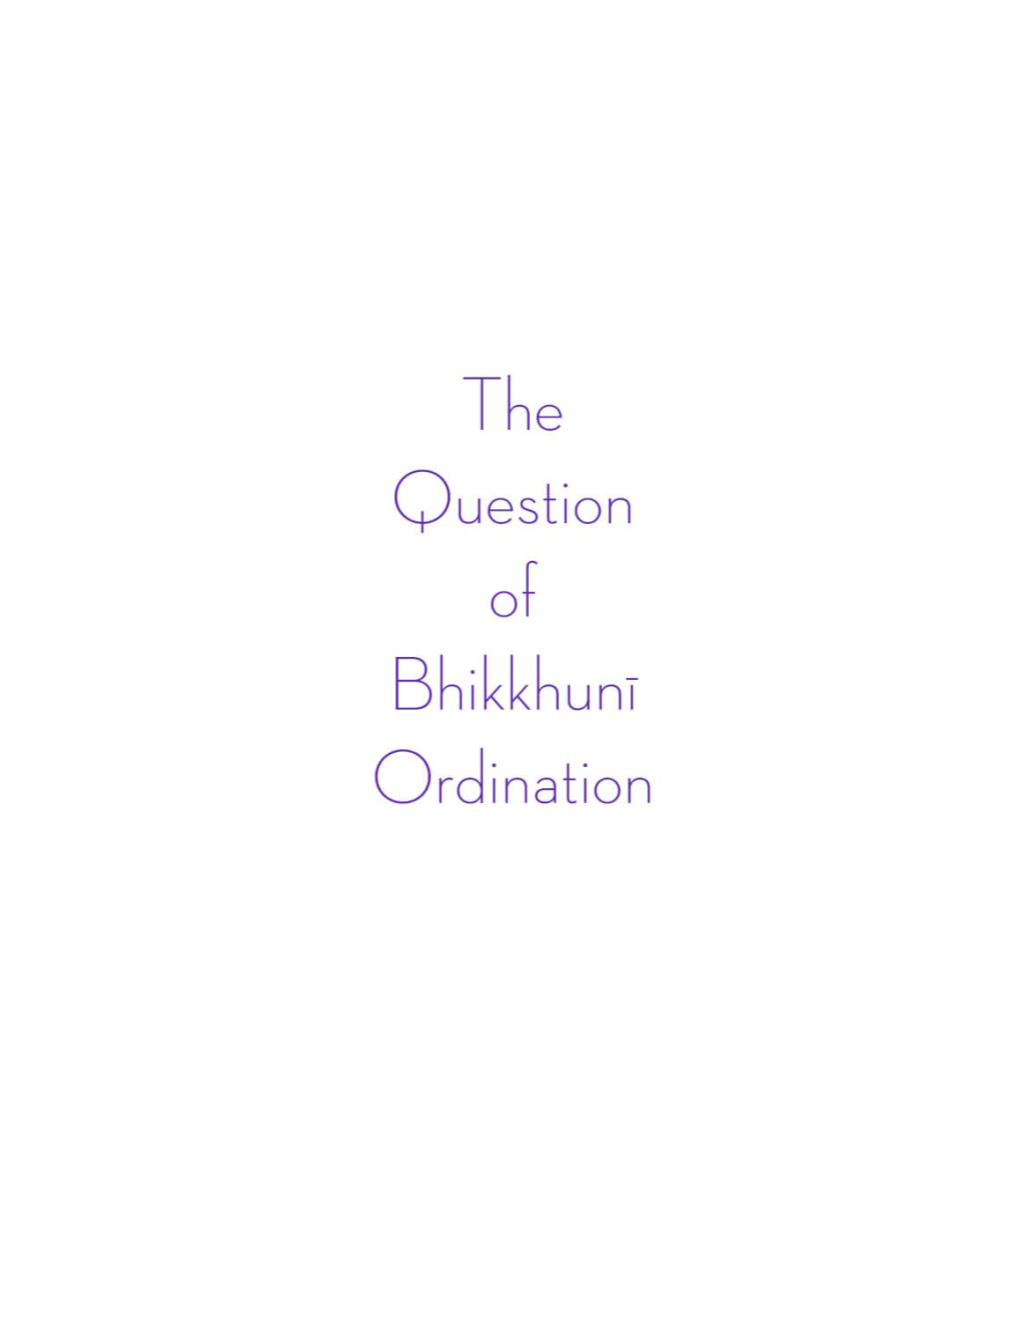 The Question of Bhikkhunī Ordination